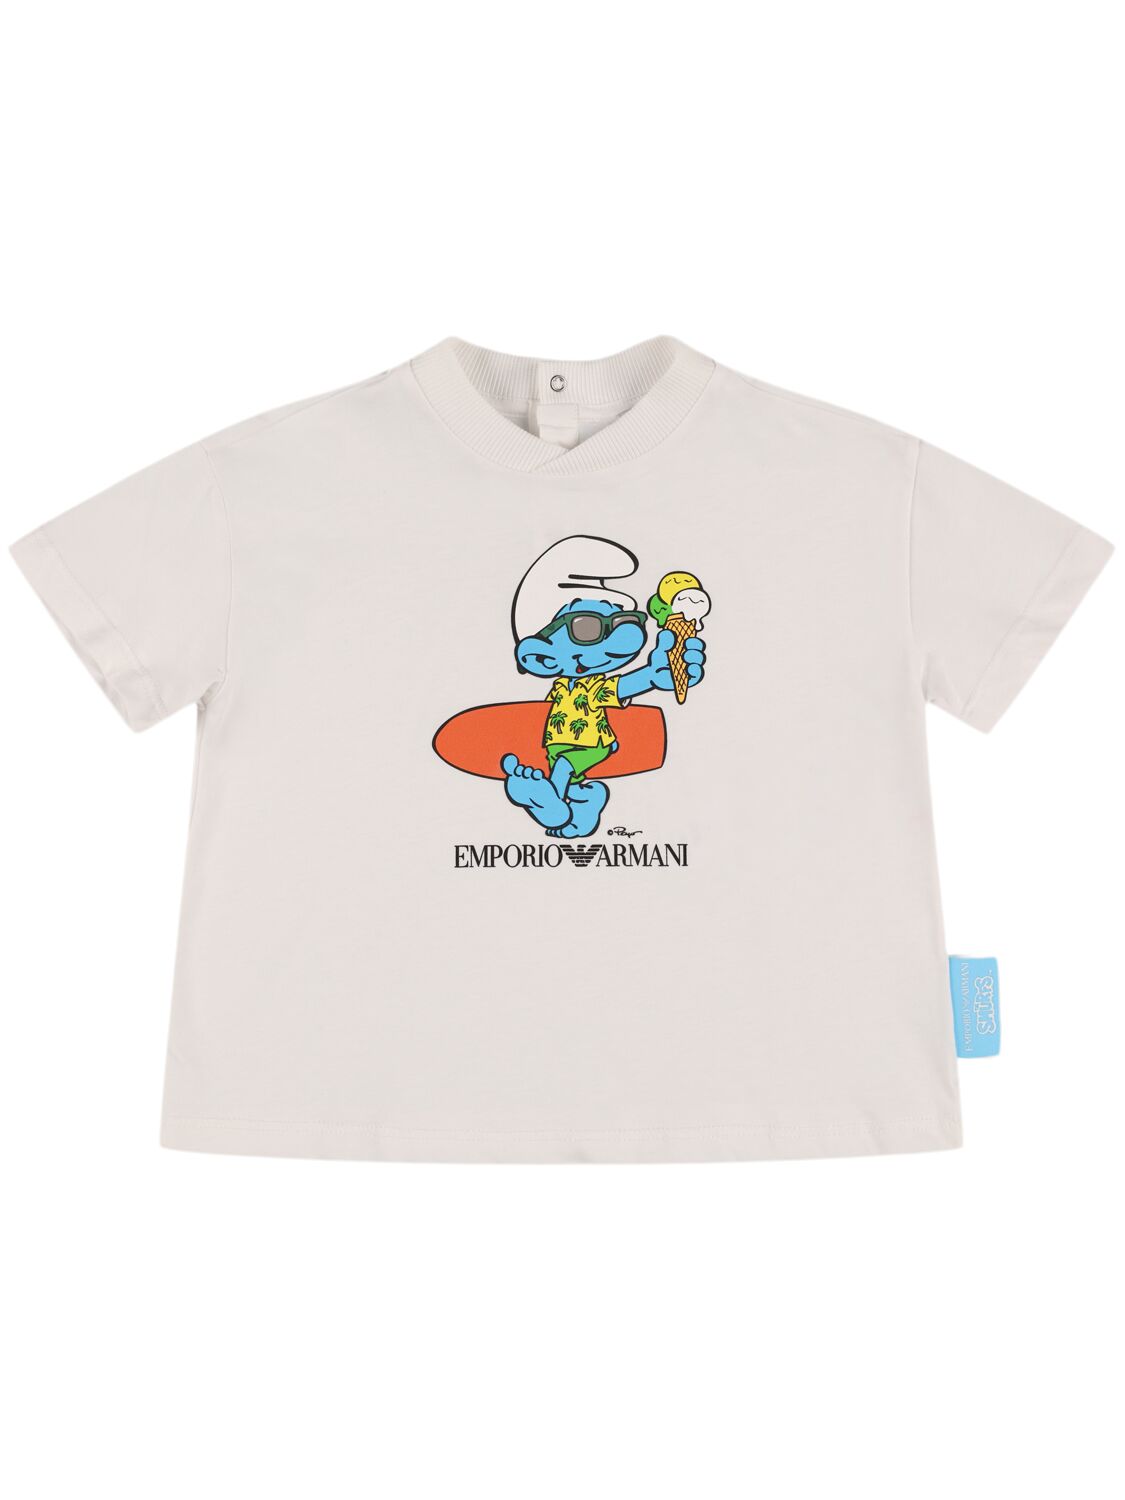 Emporio Armani Kids' Smurfs Cotton Jersey T-shirt In White